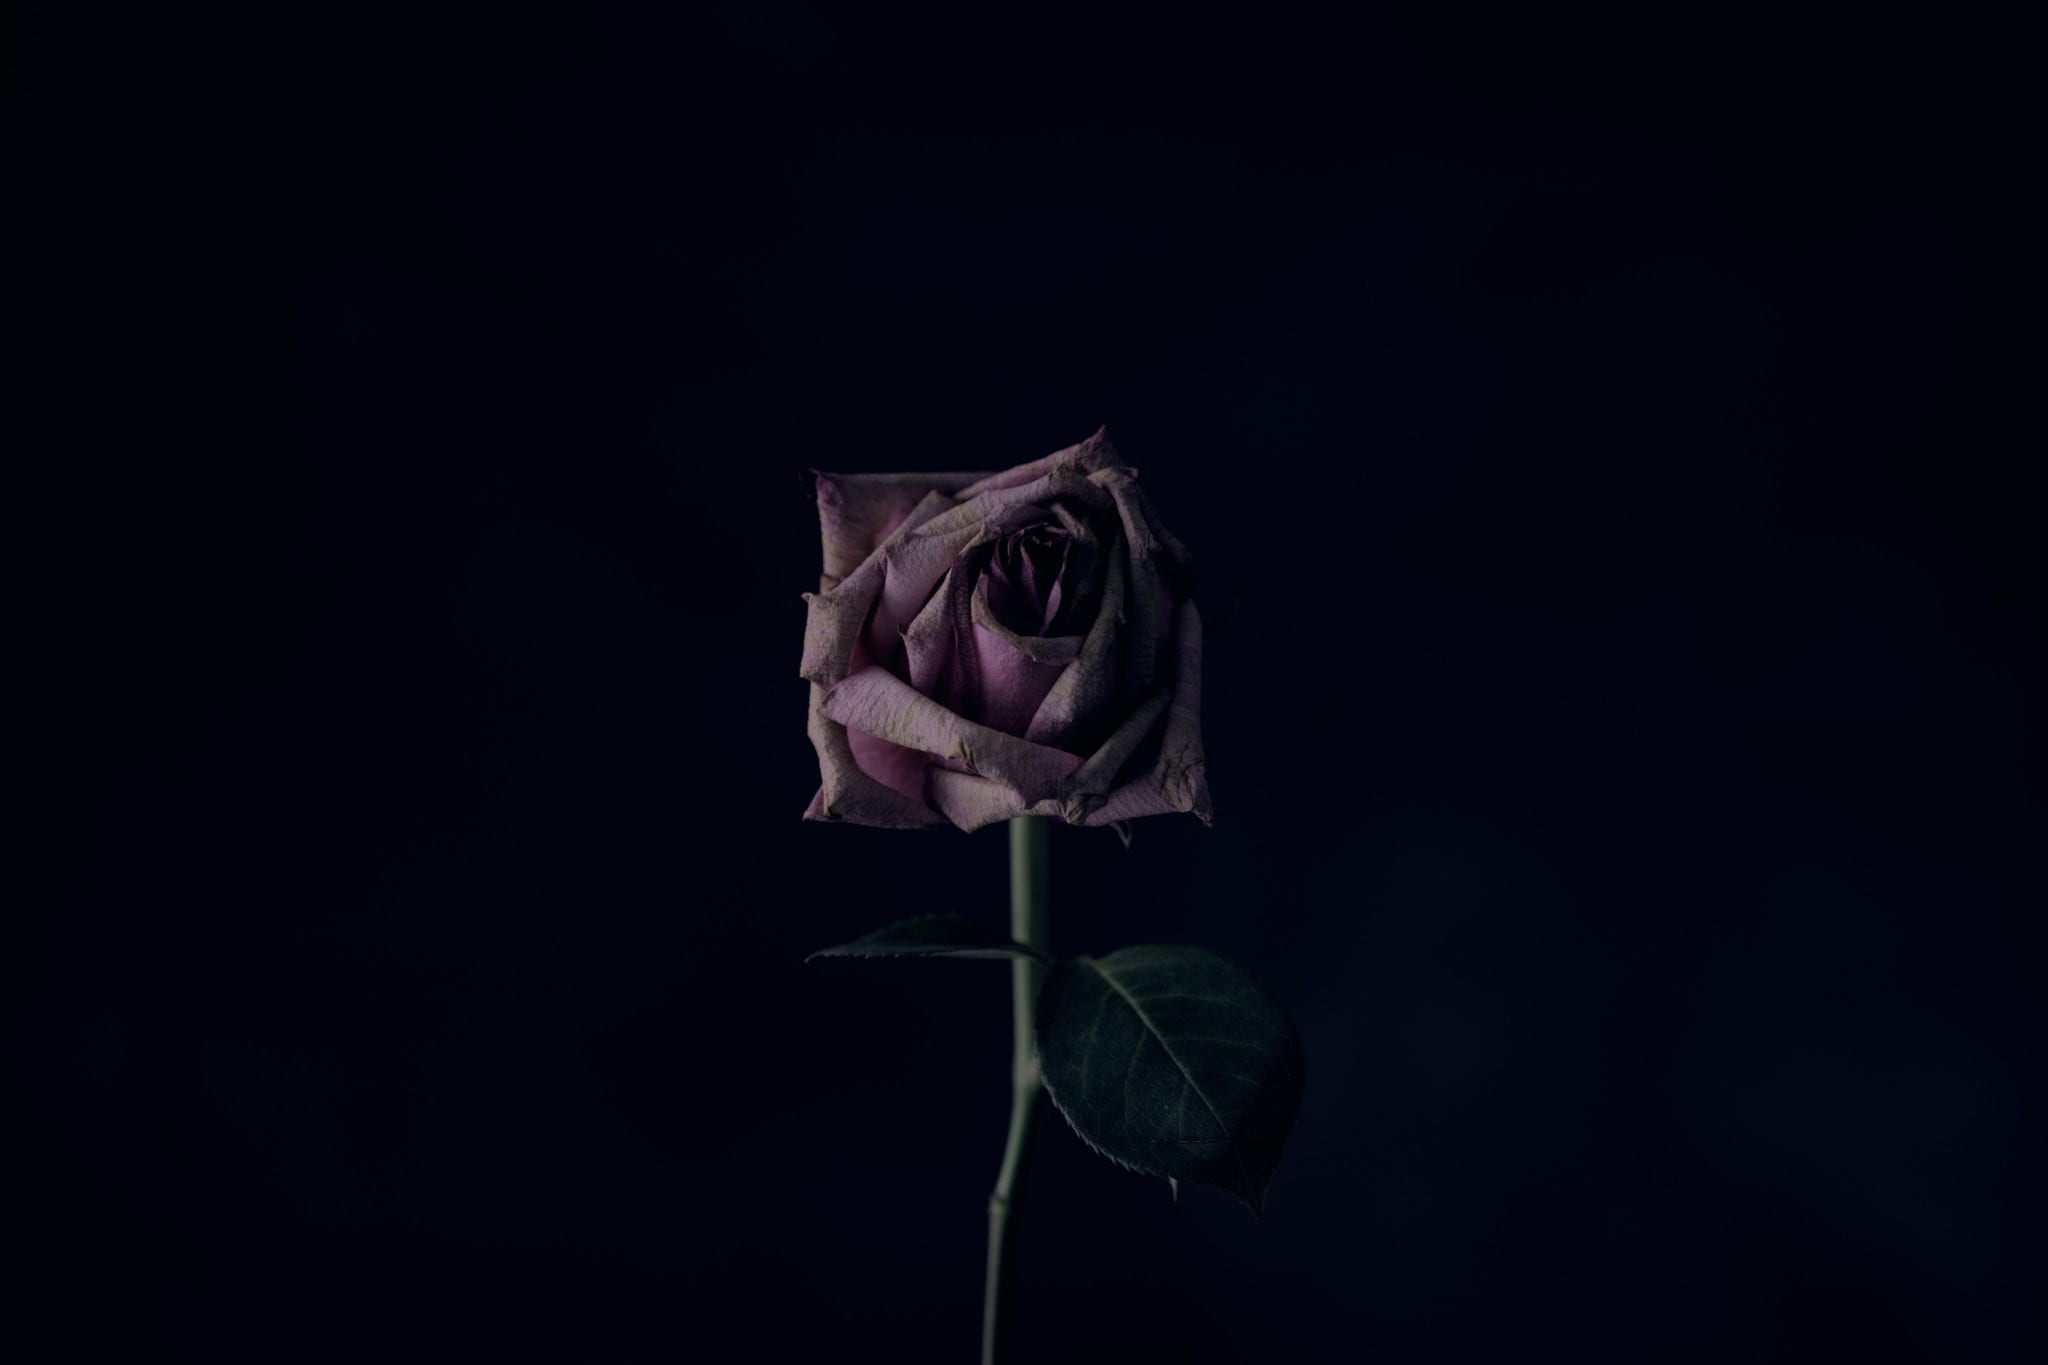 Pink rose; image by Sharon McCutcheon on Unsplash.